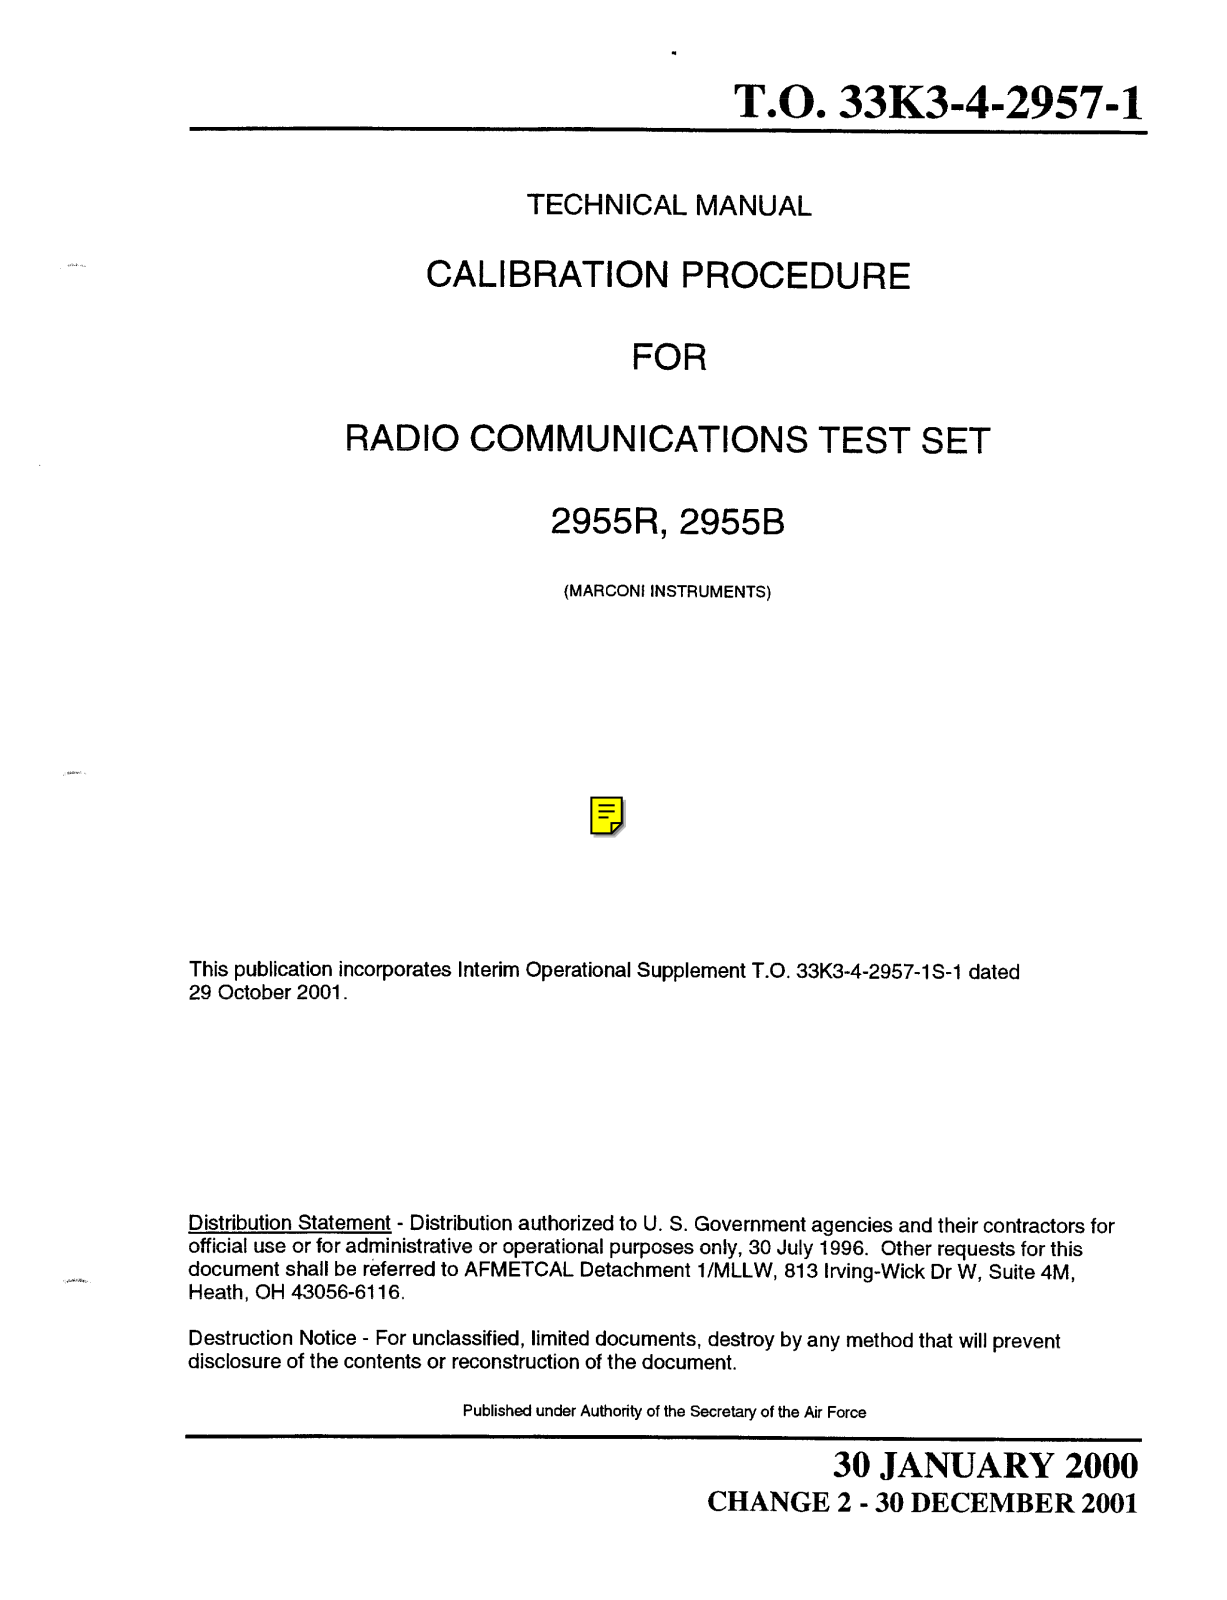 Marconi 2955B, 2955R Service Manual